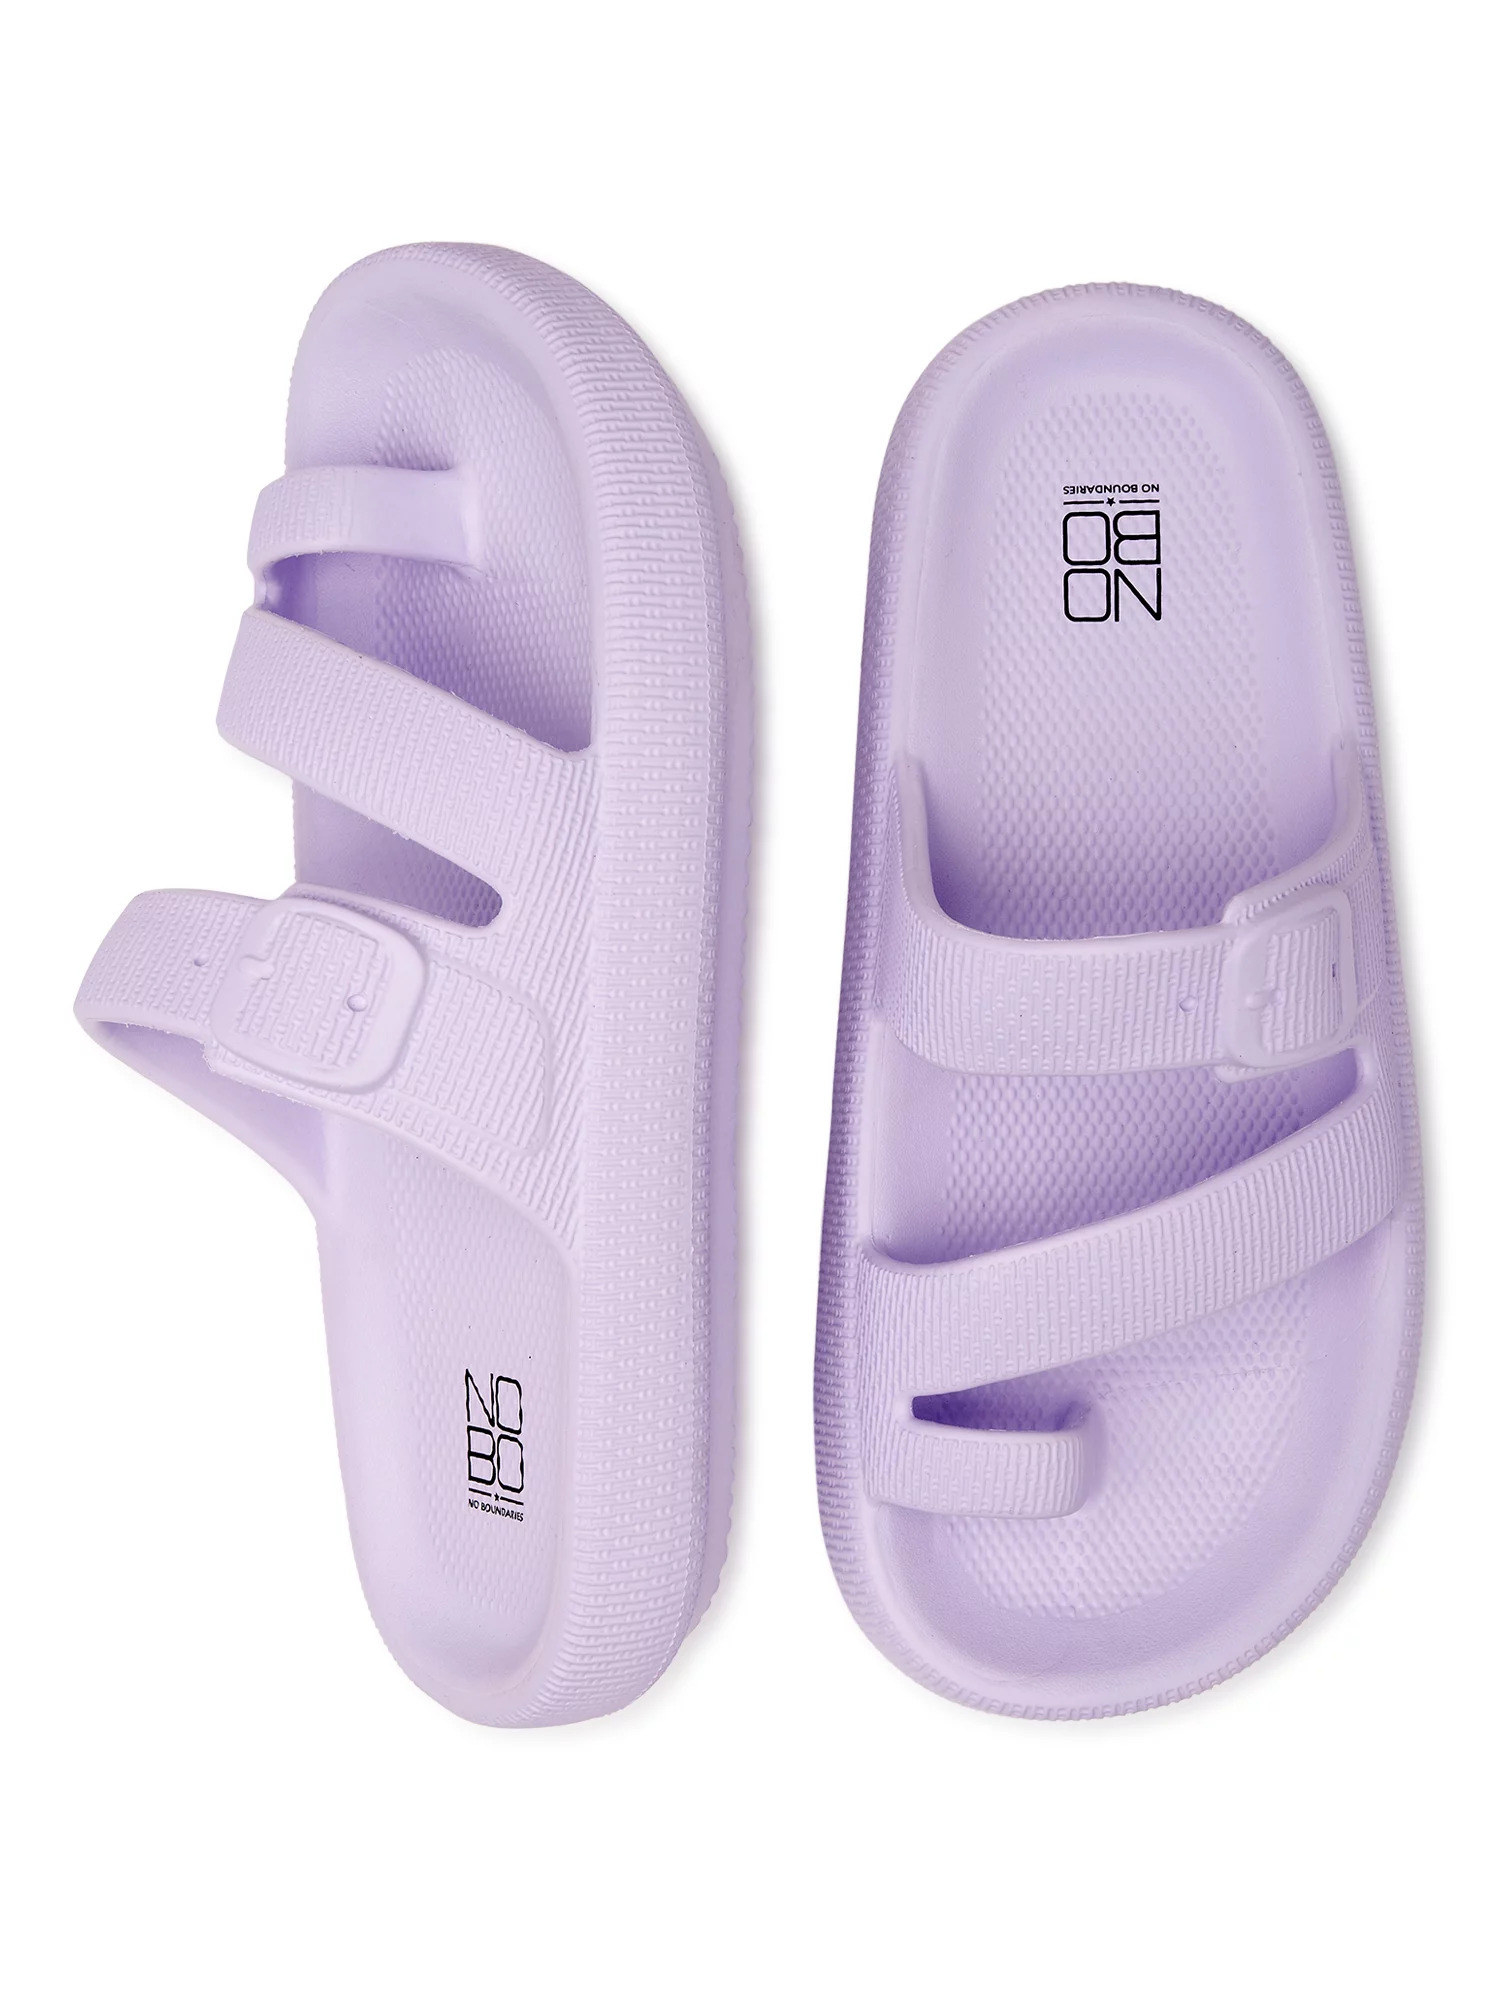 The lavender sandals